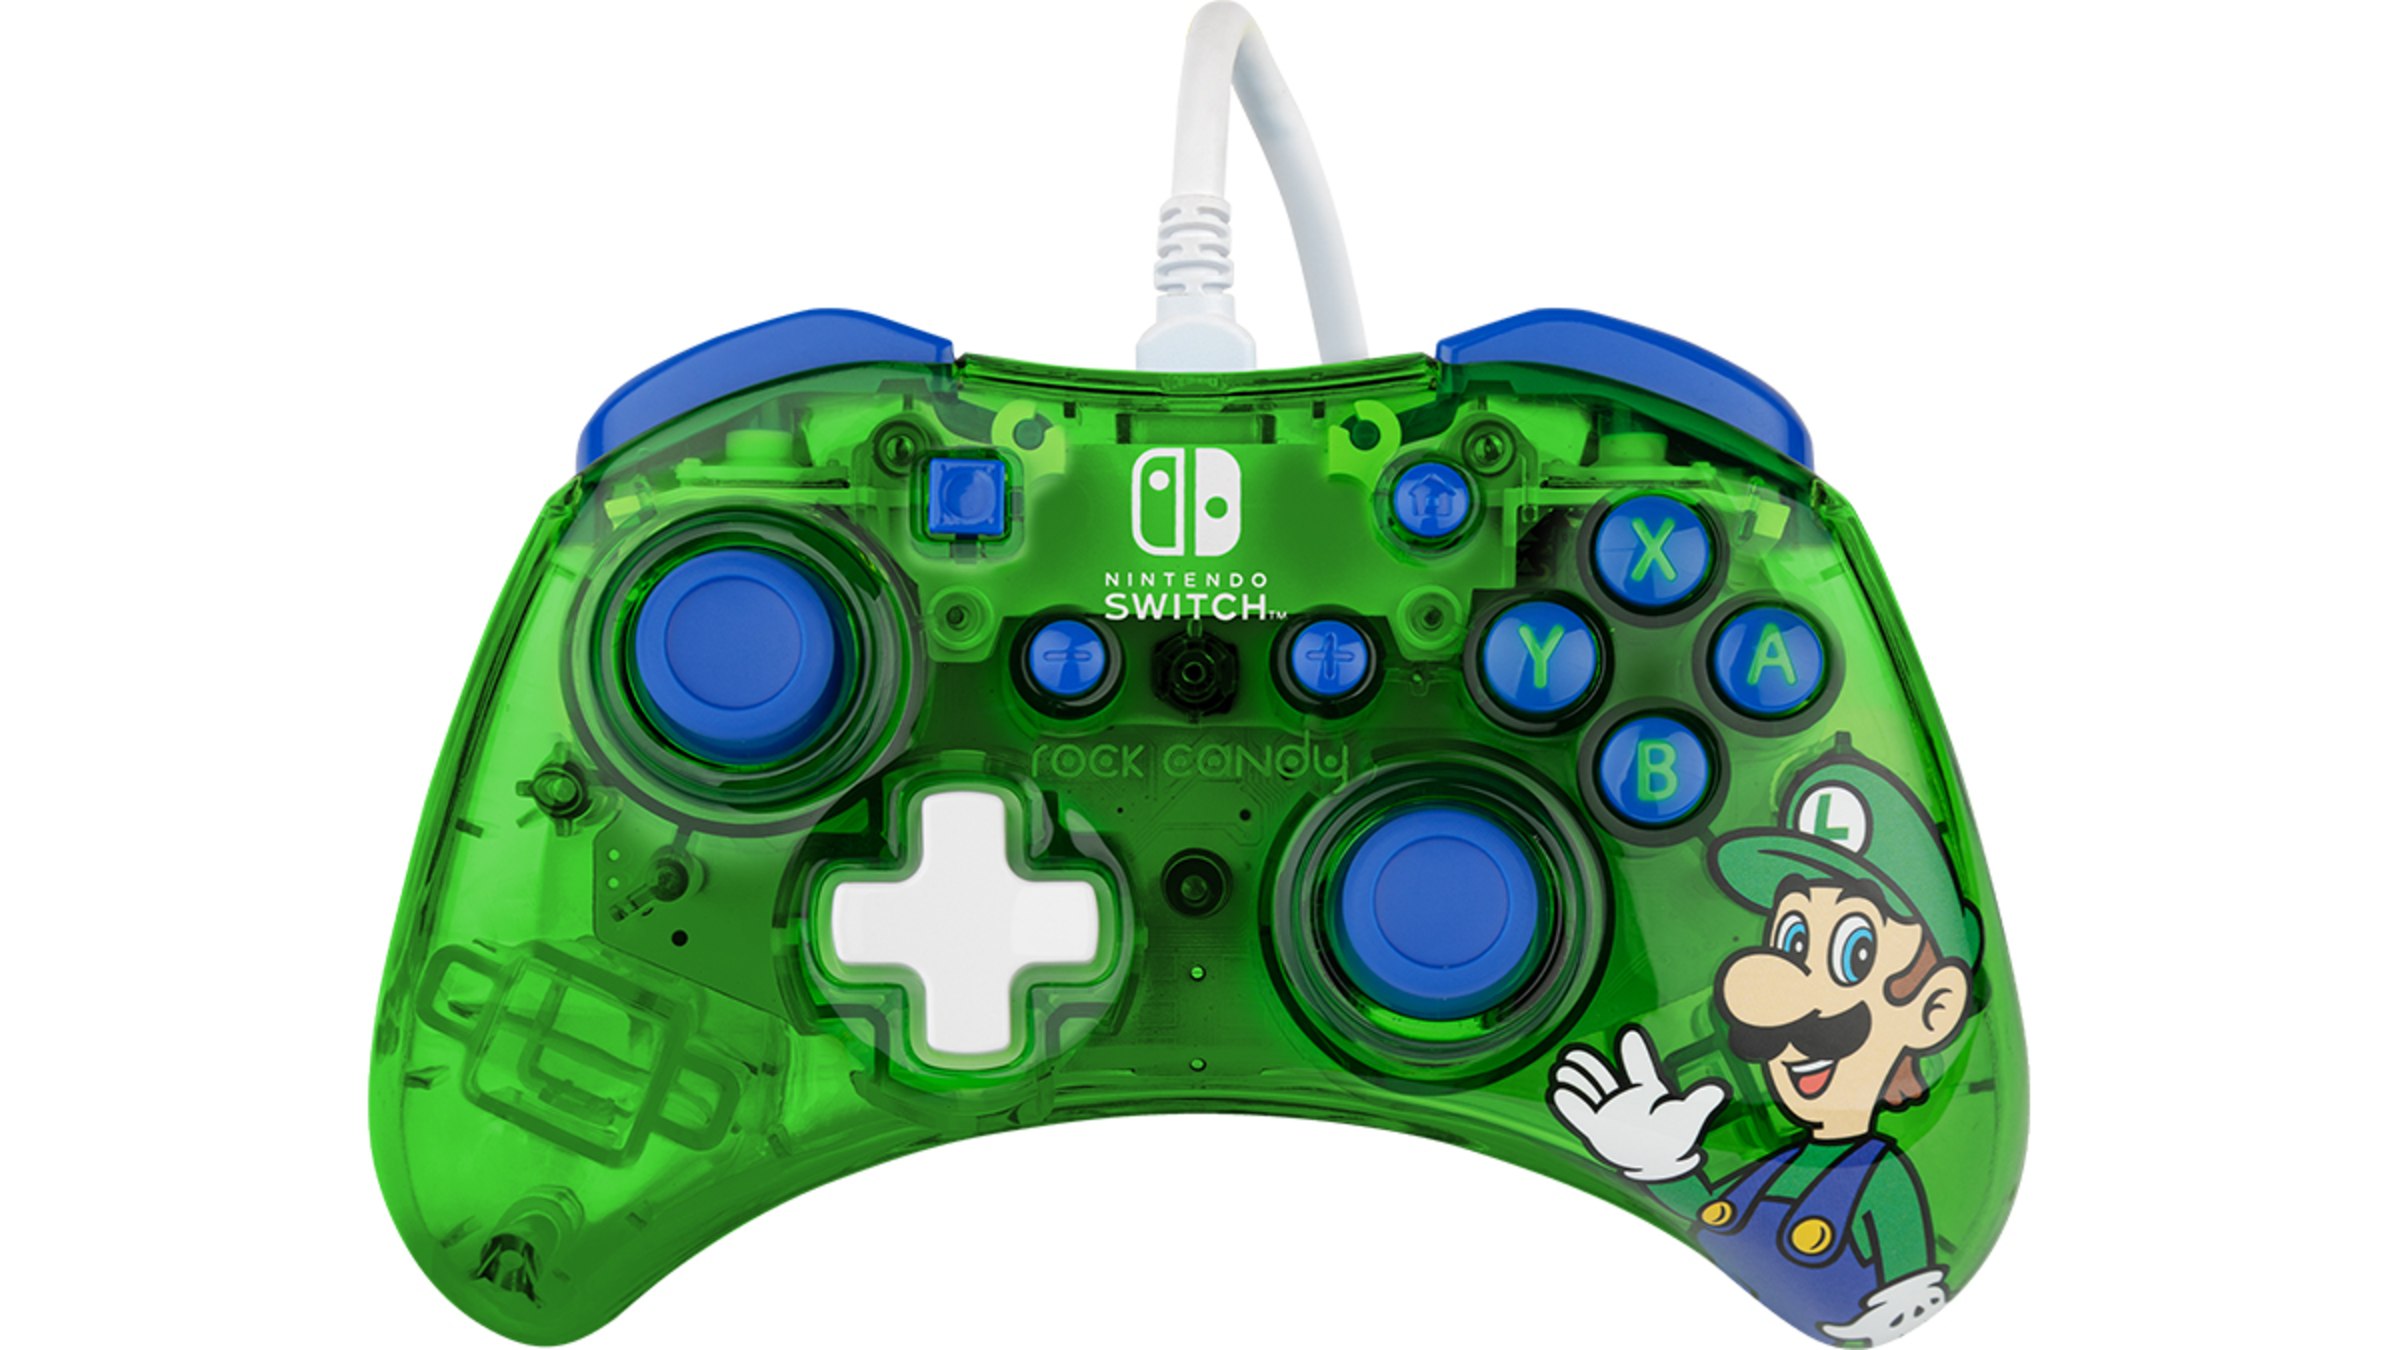 Underinddel jeg lytter til musik erotisk Rock Candy Wired Controller: Luigi for Switch - Hardware - Nintendo -  Nintendo Official Site